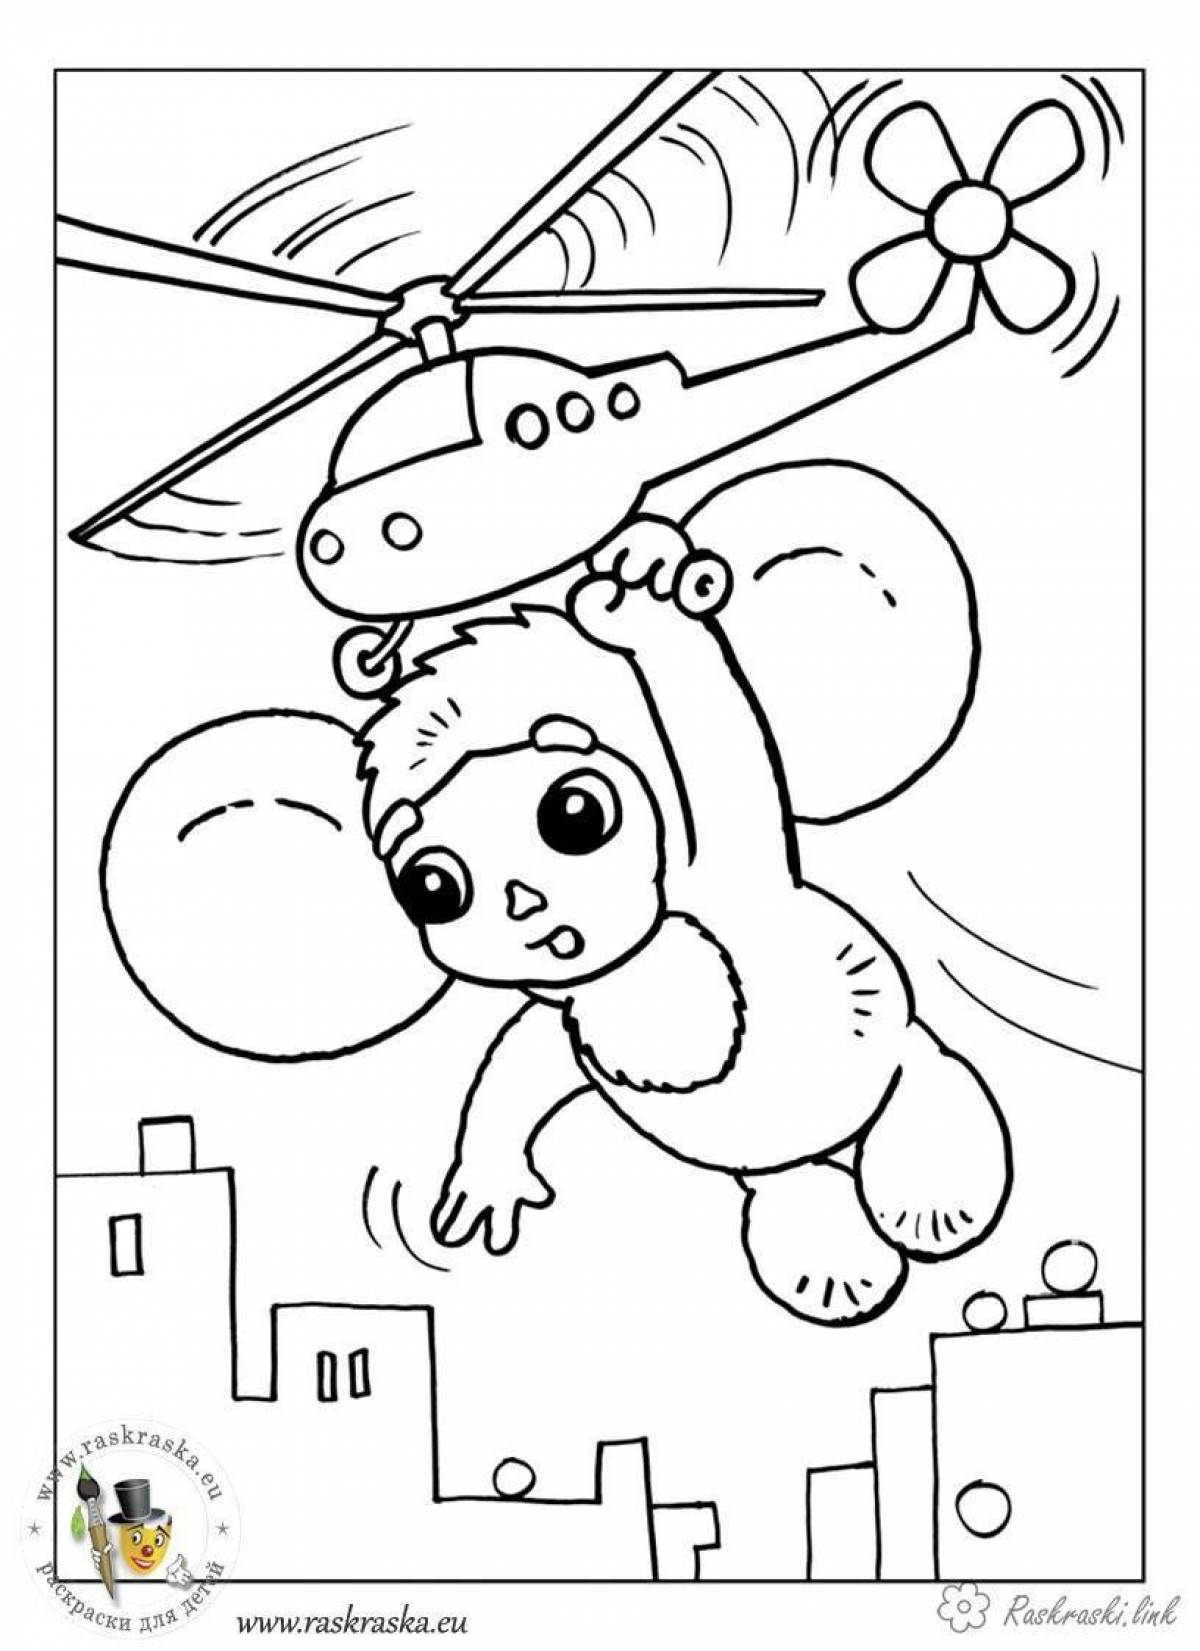 Cheerful cheburashka picture